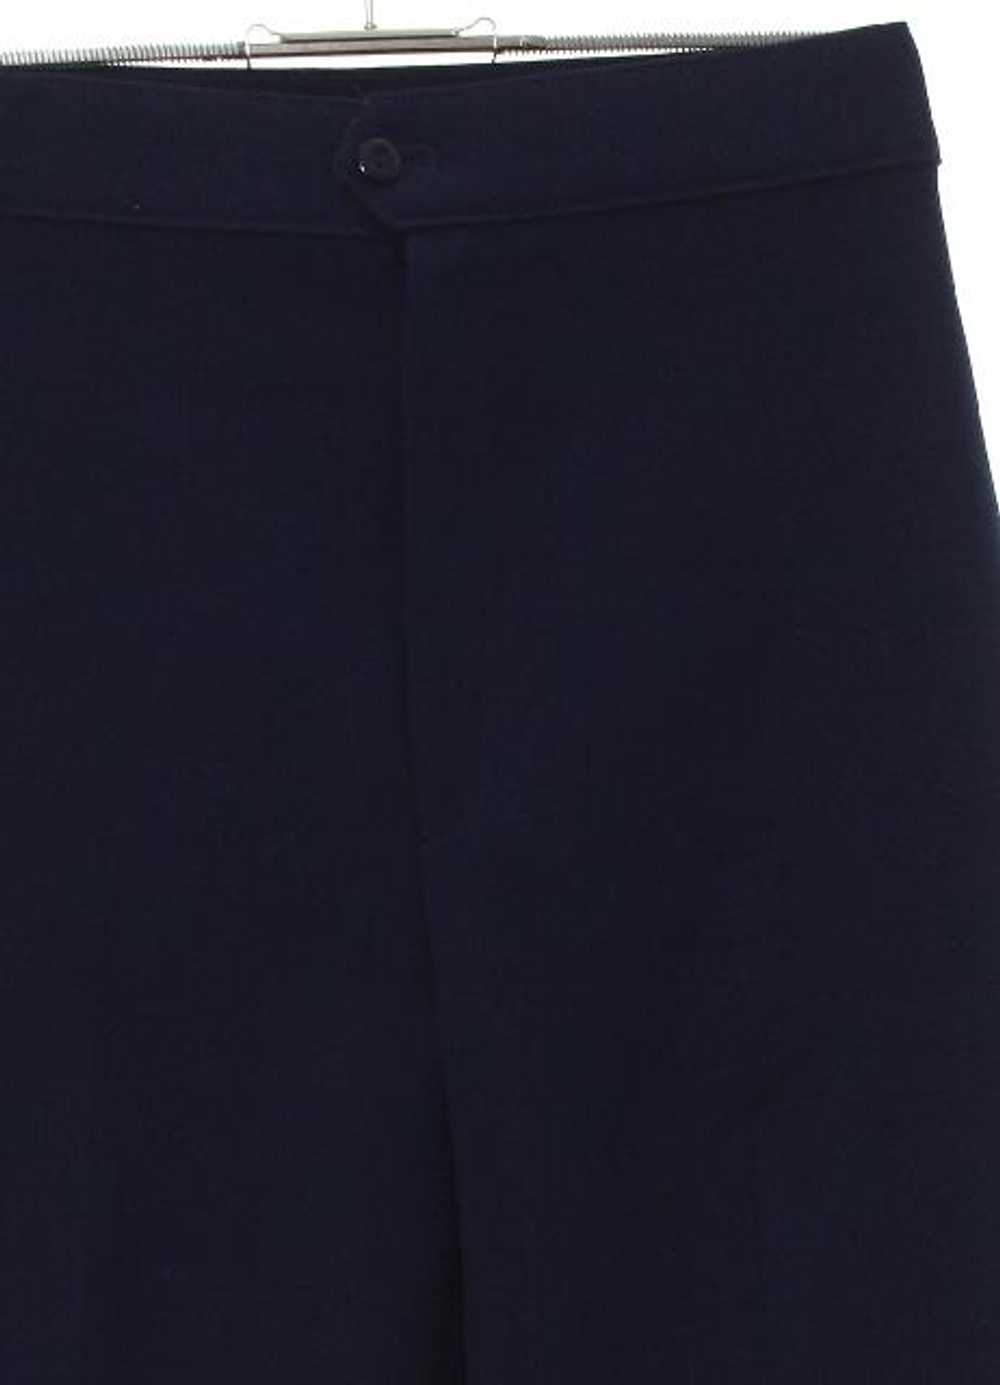 1980's Womens Dark Blue Knit Pants - image 2